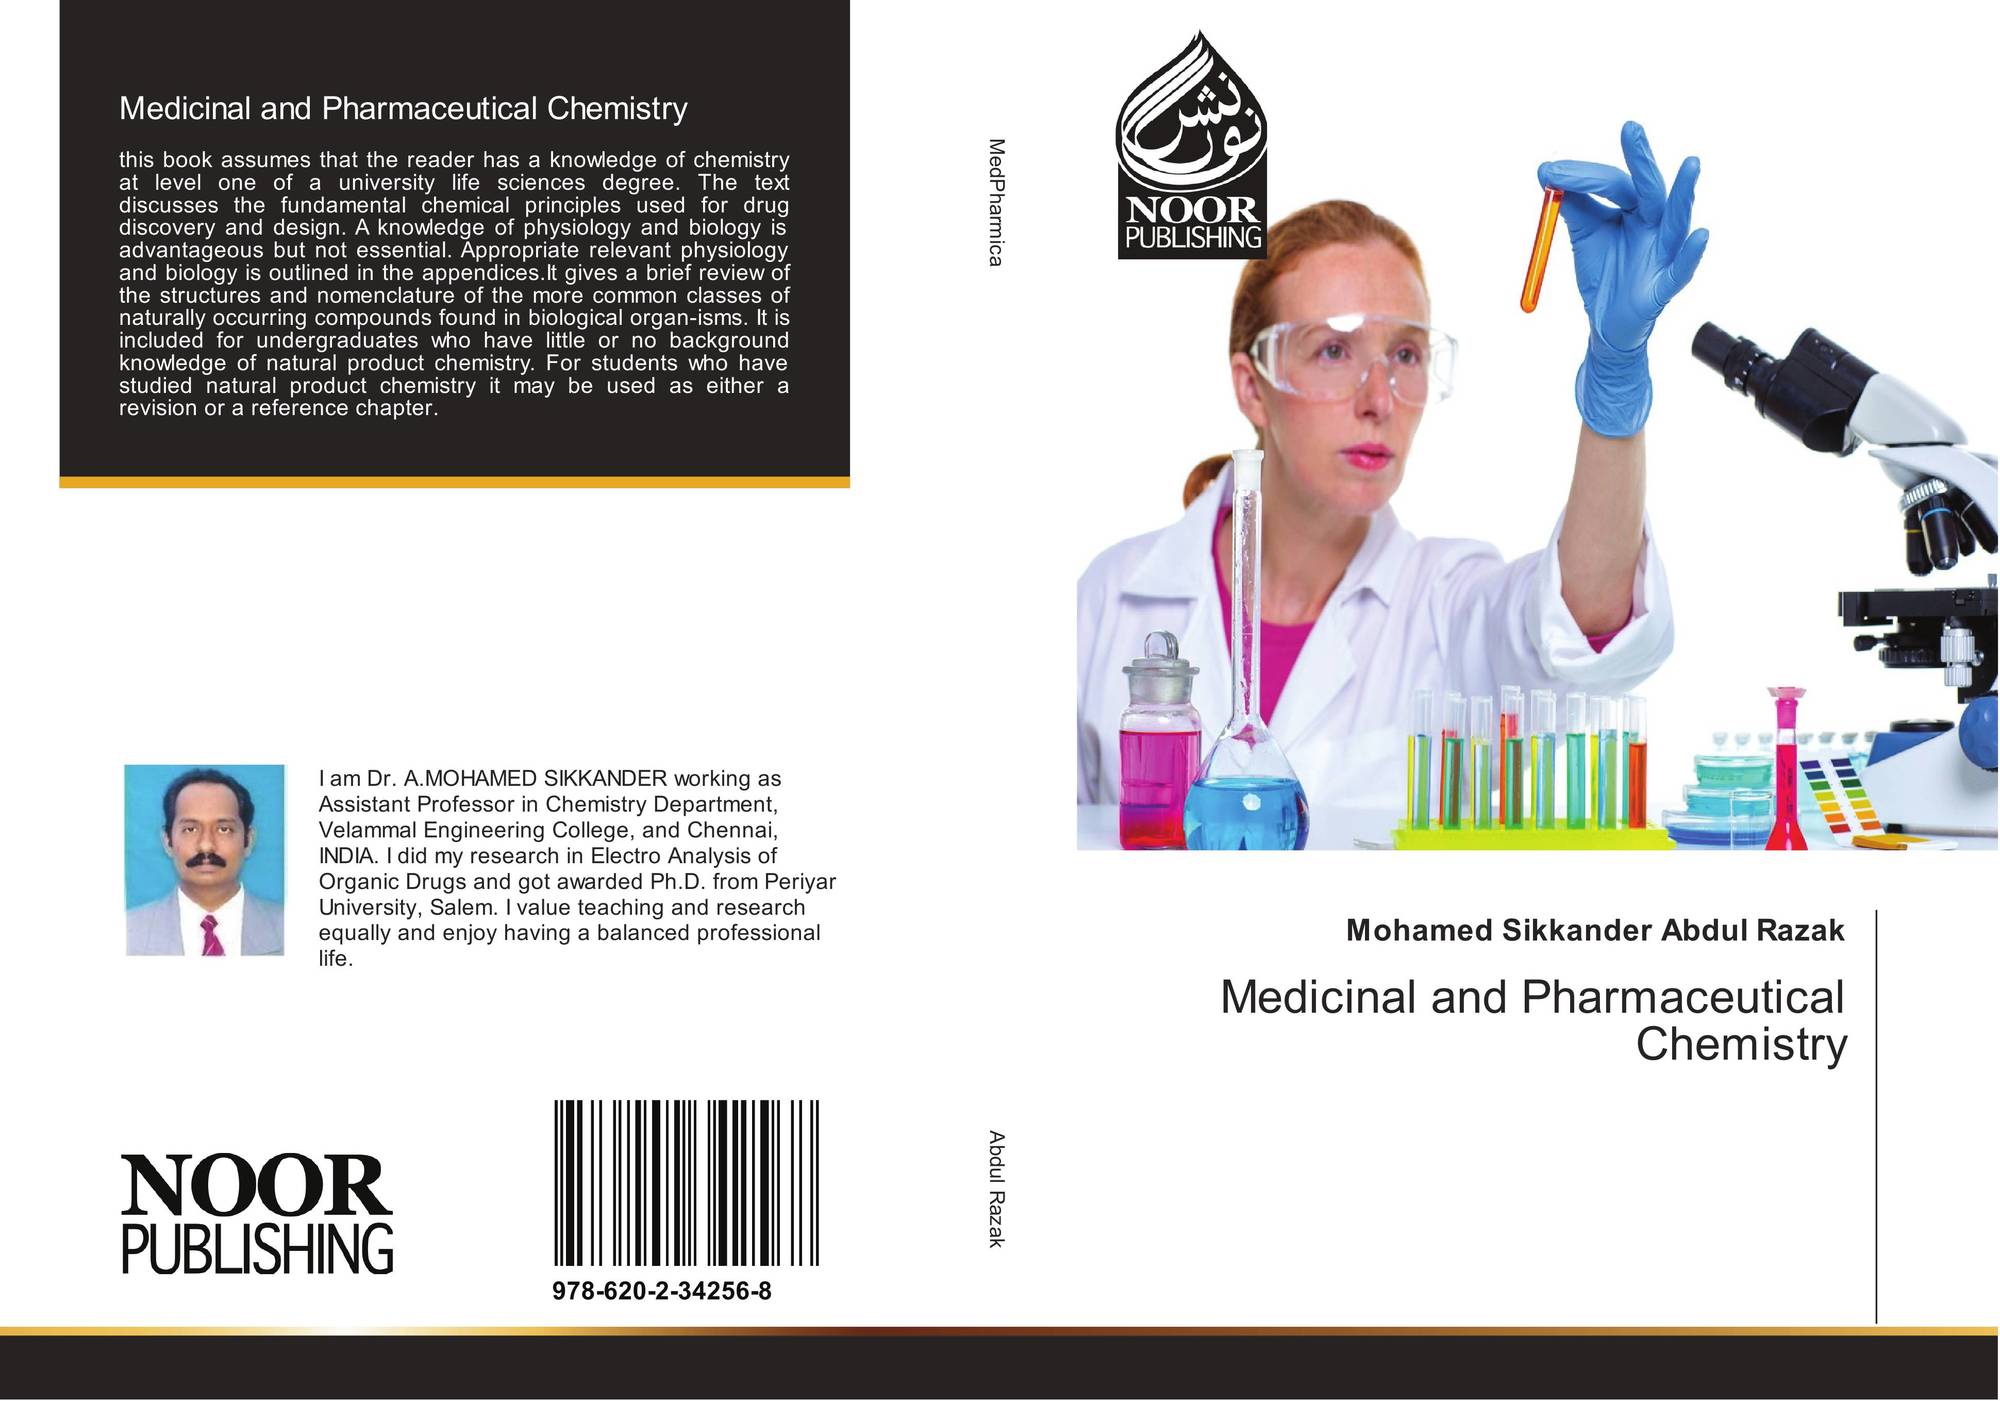 Essential Pharmaceutical Chemistry. Drug Design and medicinal Chemistry. Pharmaceutical Chemistry Journal. Medicinal Chemistry and drug Design lb.